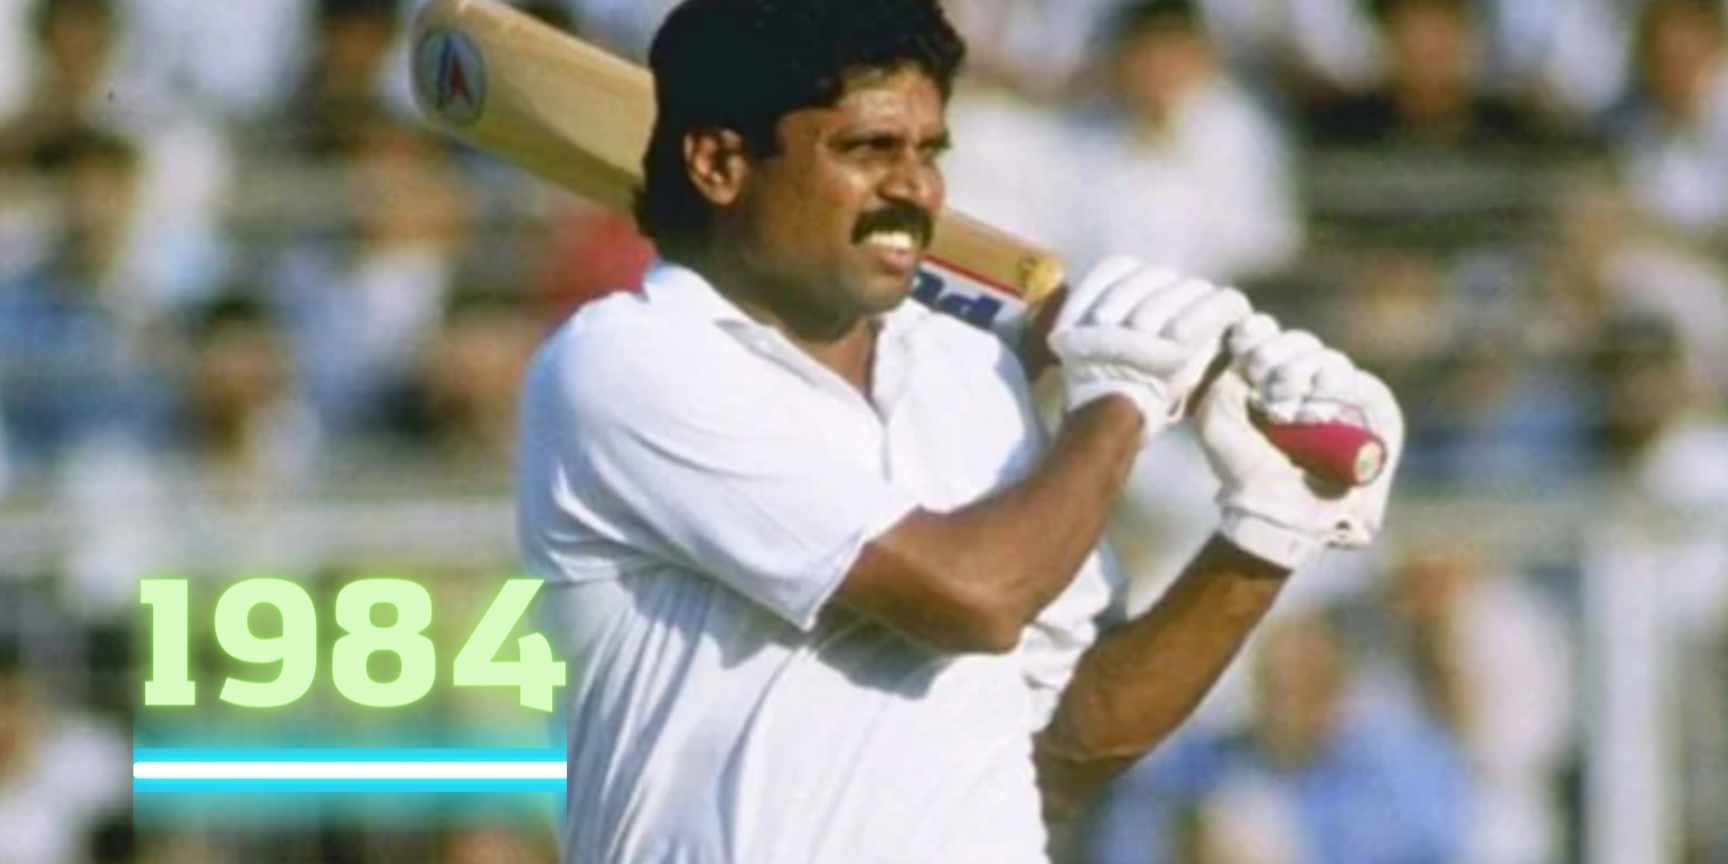 1984 cricketer